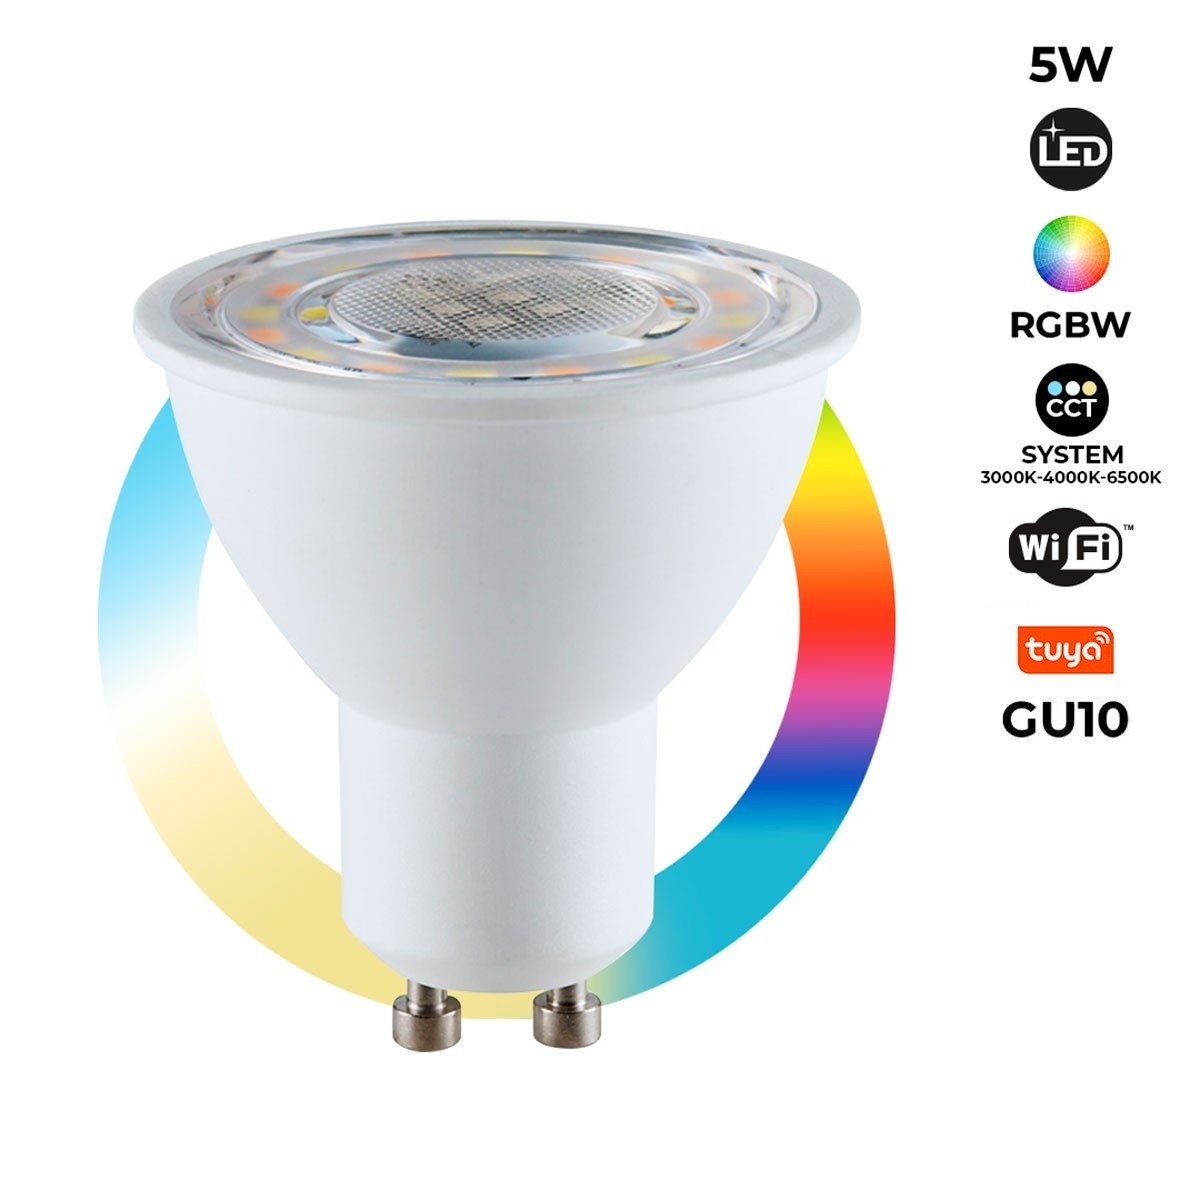 Bombilla inteligente LED WIFI GU10 - RGBW CCT - 5W | Home